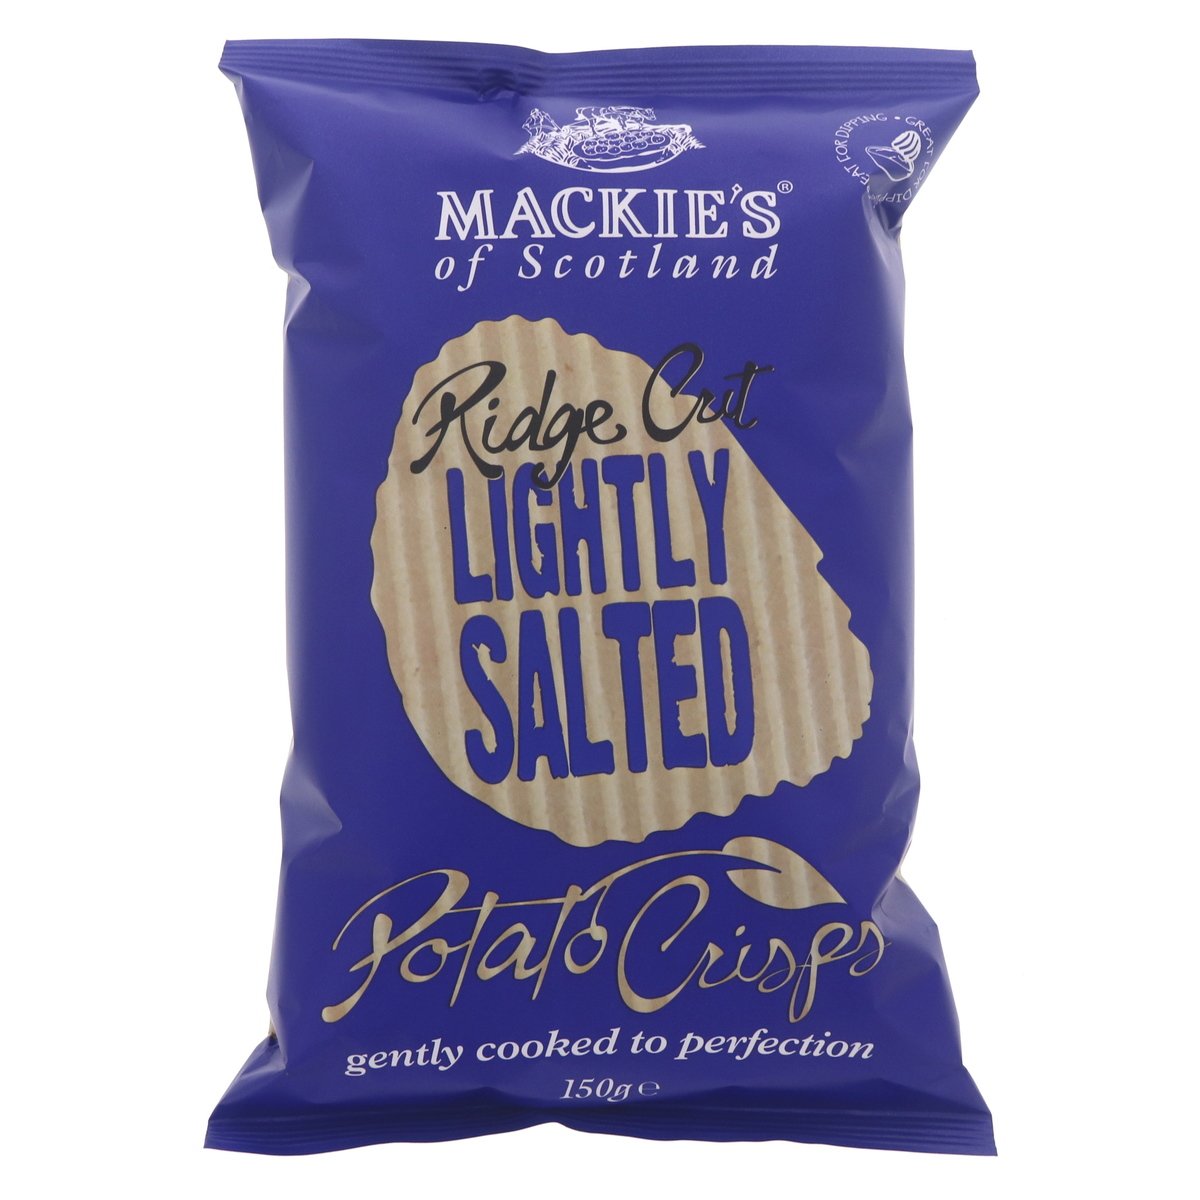 Mackie's Ridge Cut Lightly Salted Potato Crisps 150 g